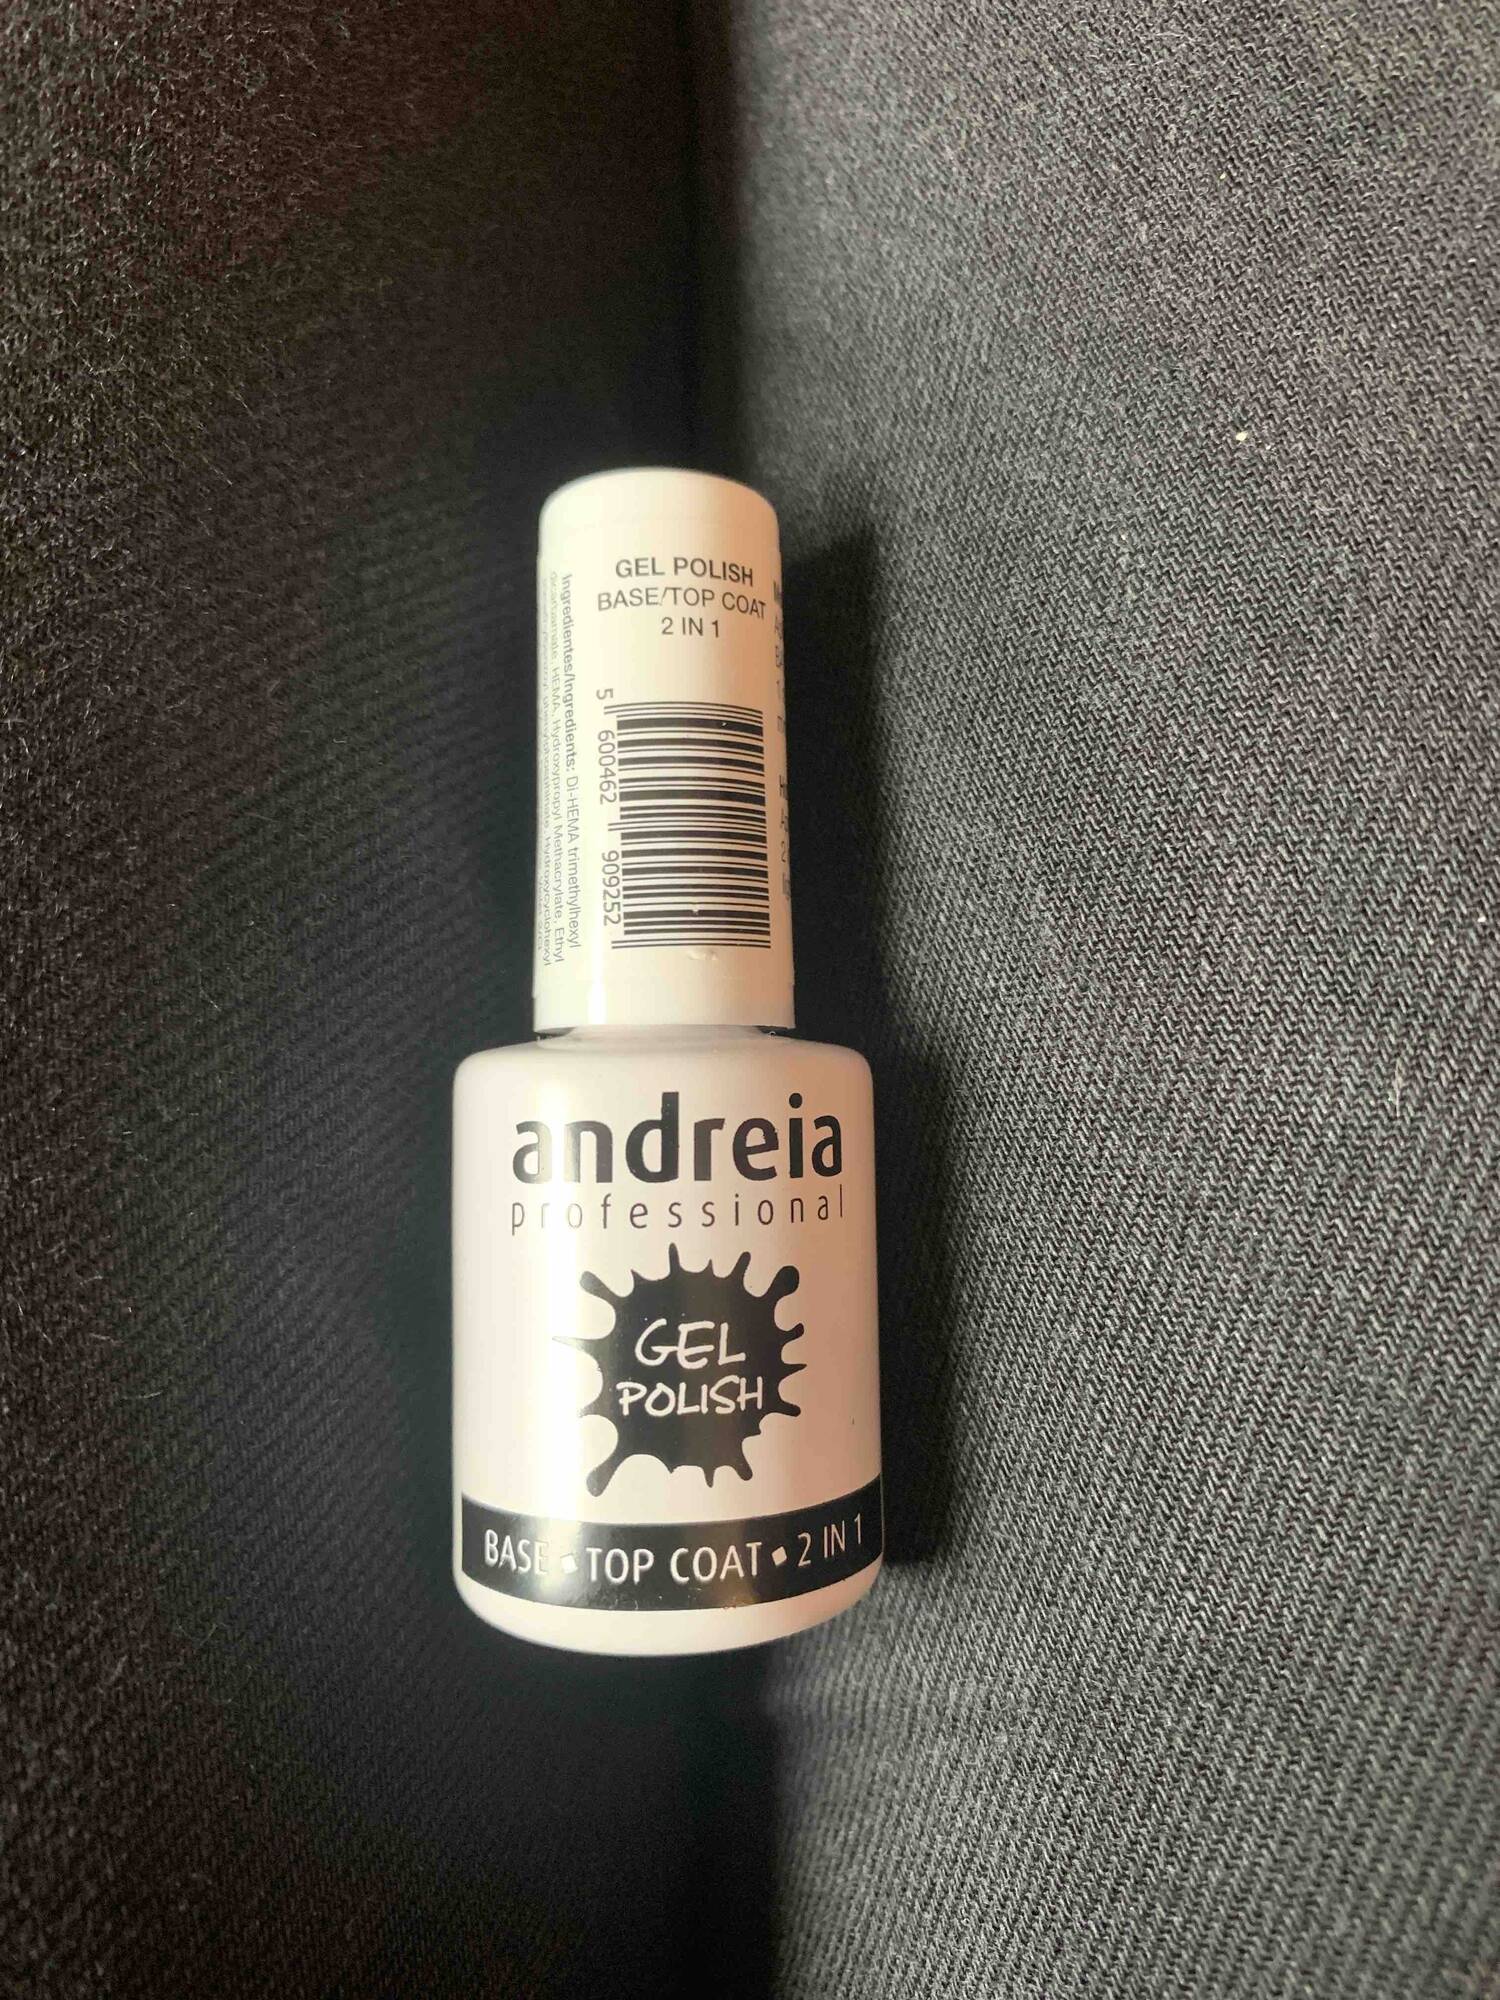 ANDREIA PROFESSIONAL - Gel polish - Base/Top coat 2 in 1